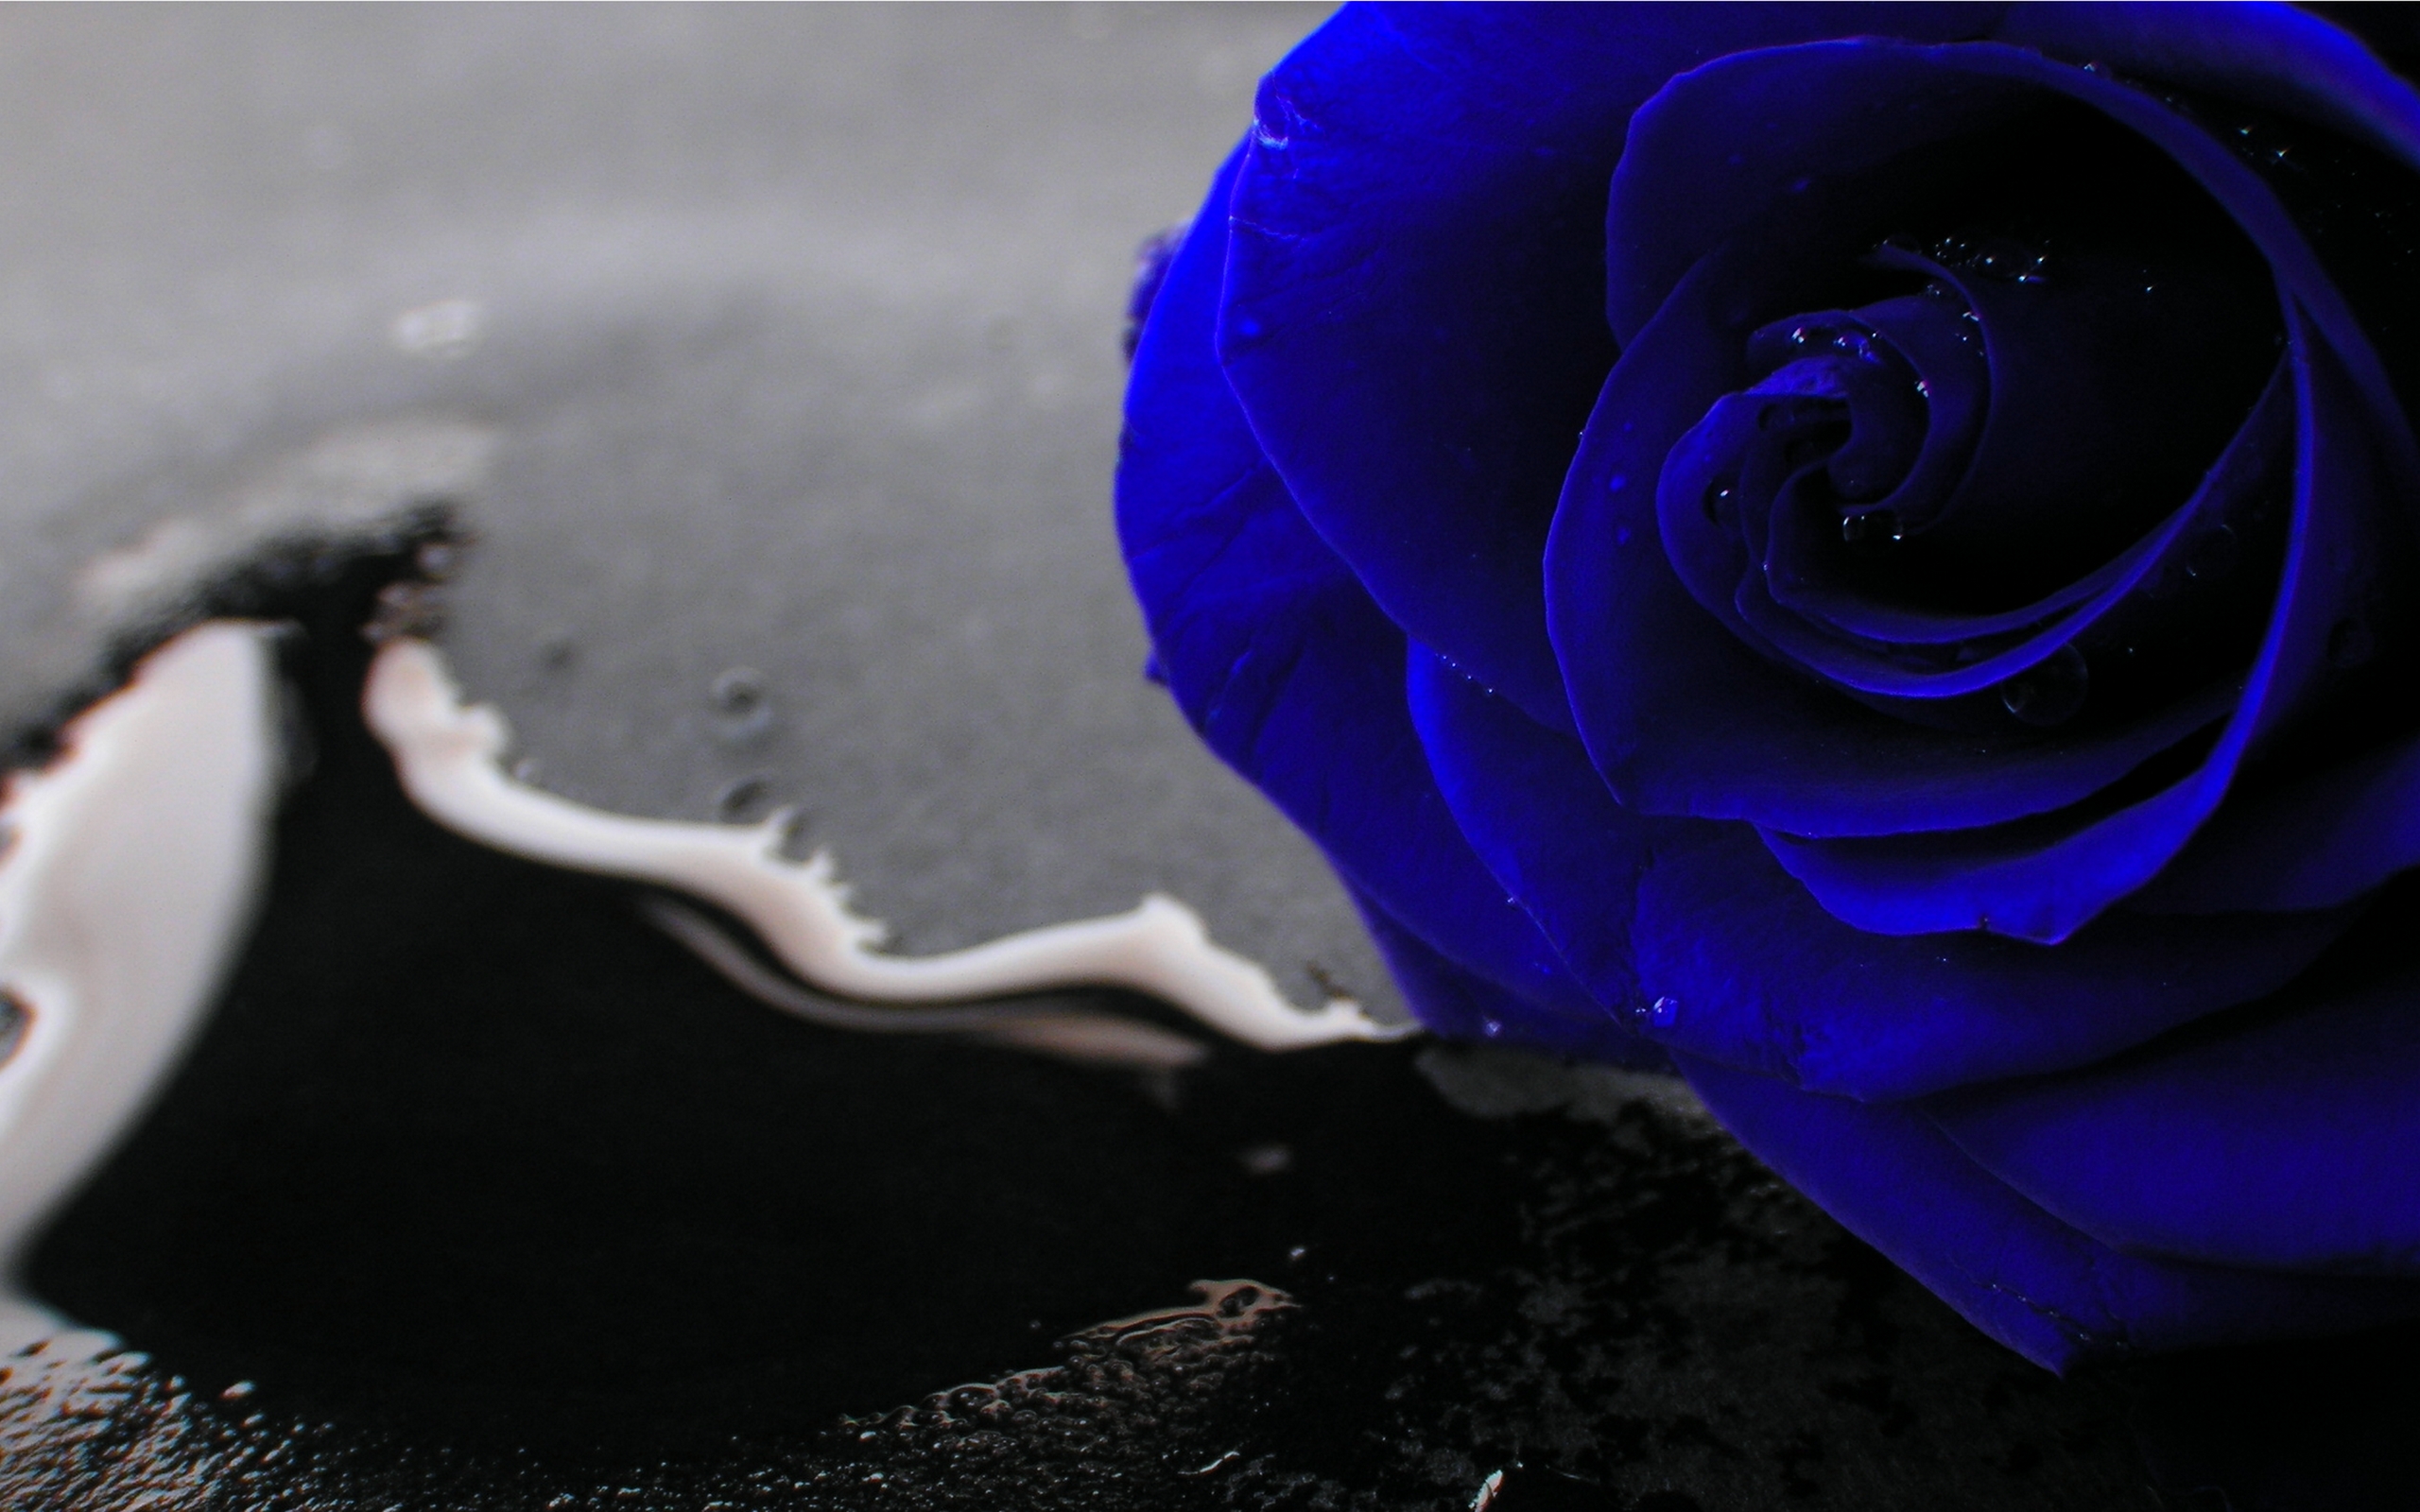 Blue Rose Desktop Wallpaper